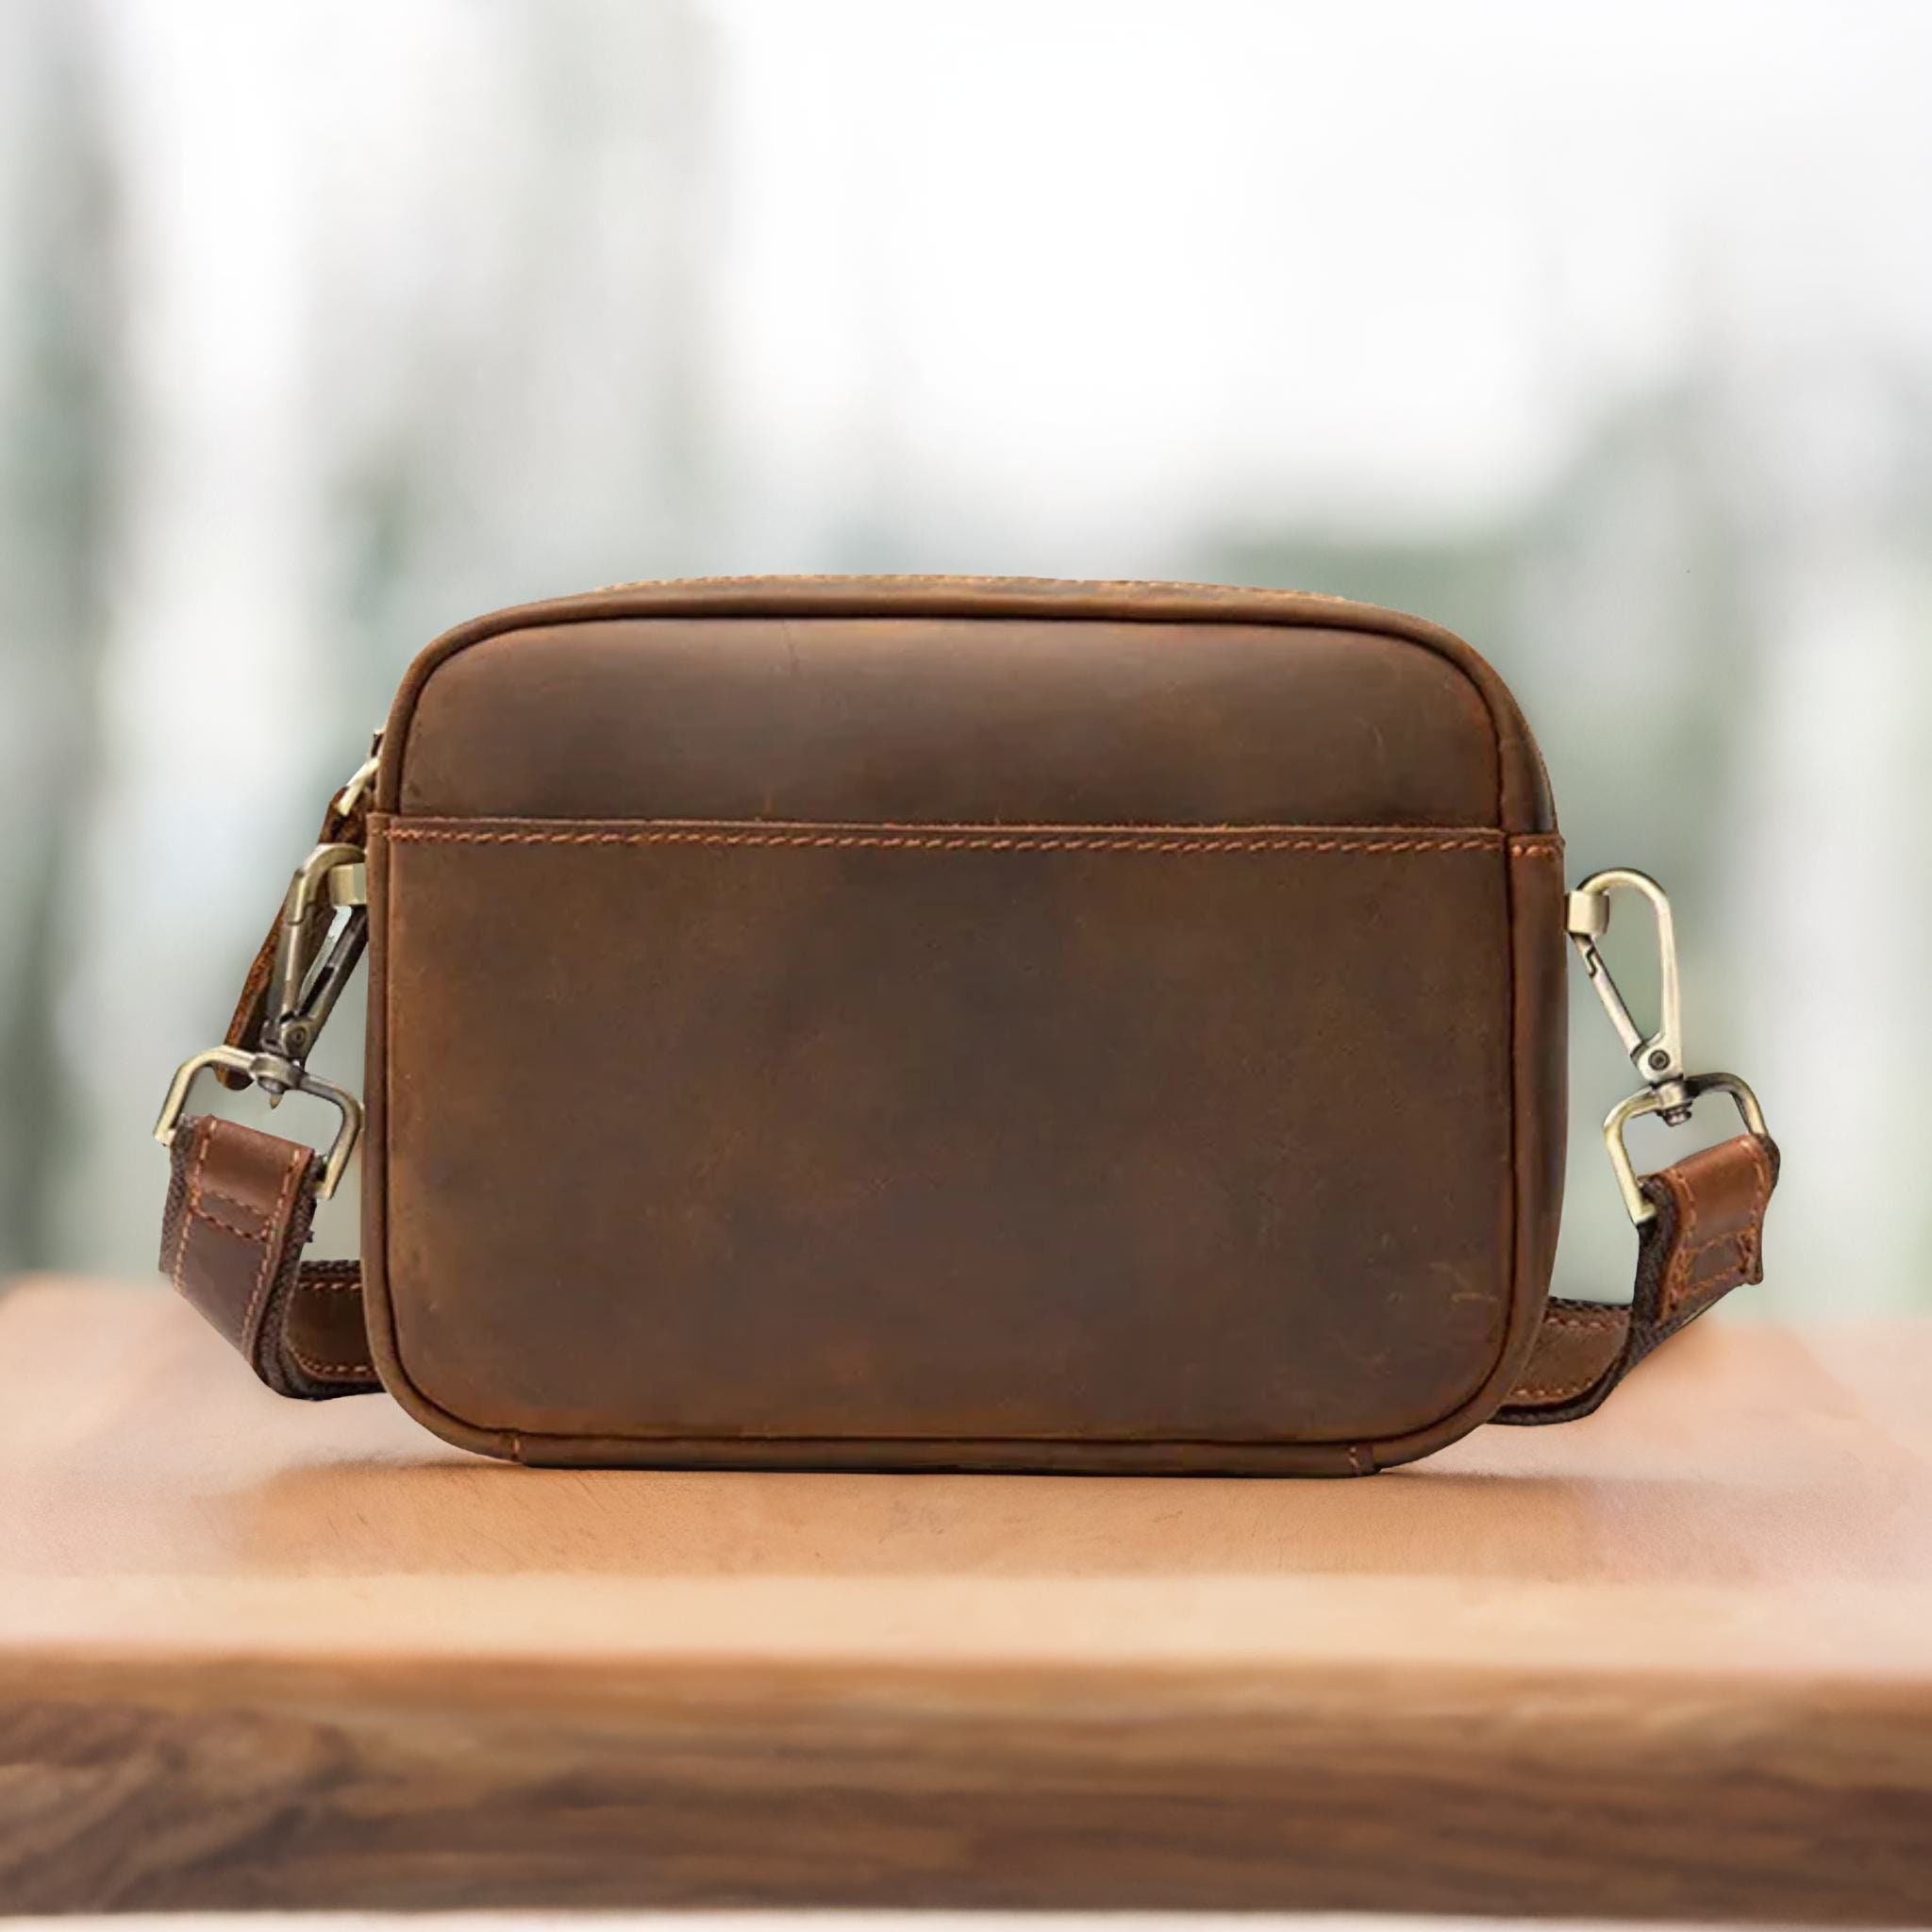 LV design style Premium Waist Pouch Bag,Shoulder to chest cross bag,Outdoor  travel bag,passport